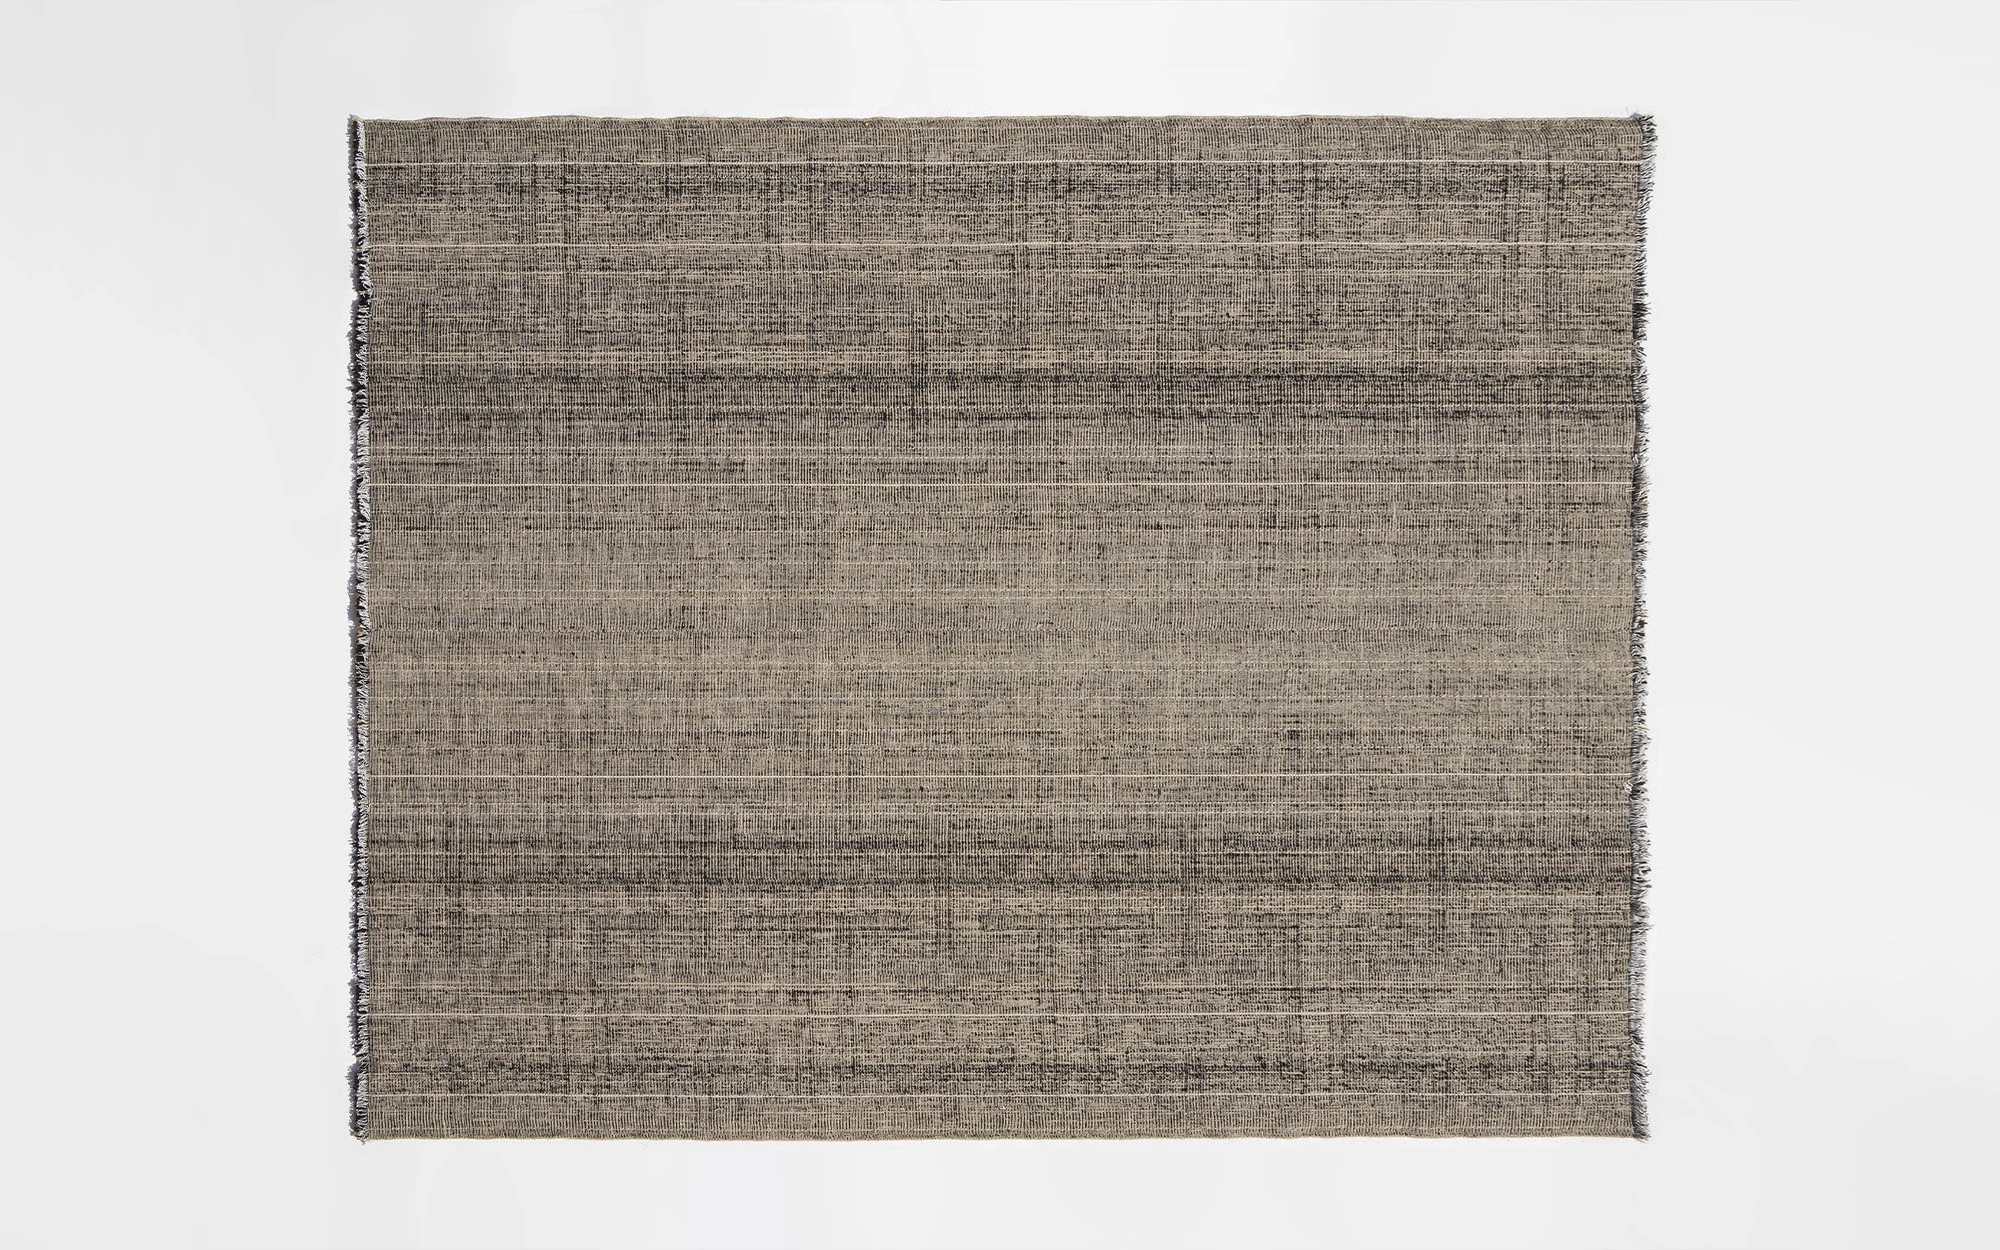 Wilton Carpet S - Ronan & Erwan Bouroullec - Stool - Galerie kreo